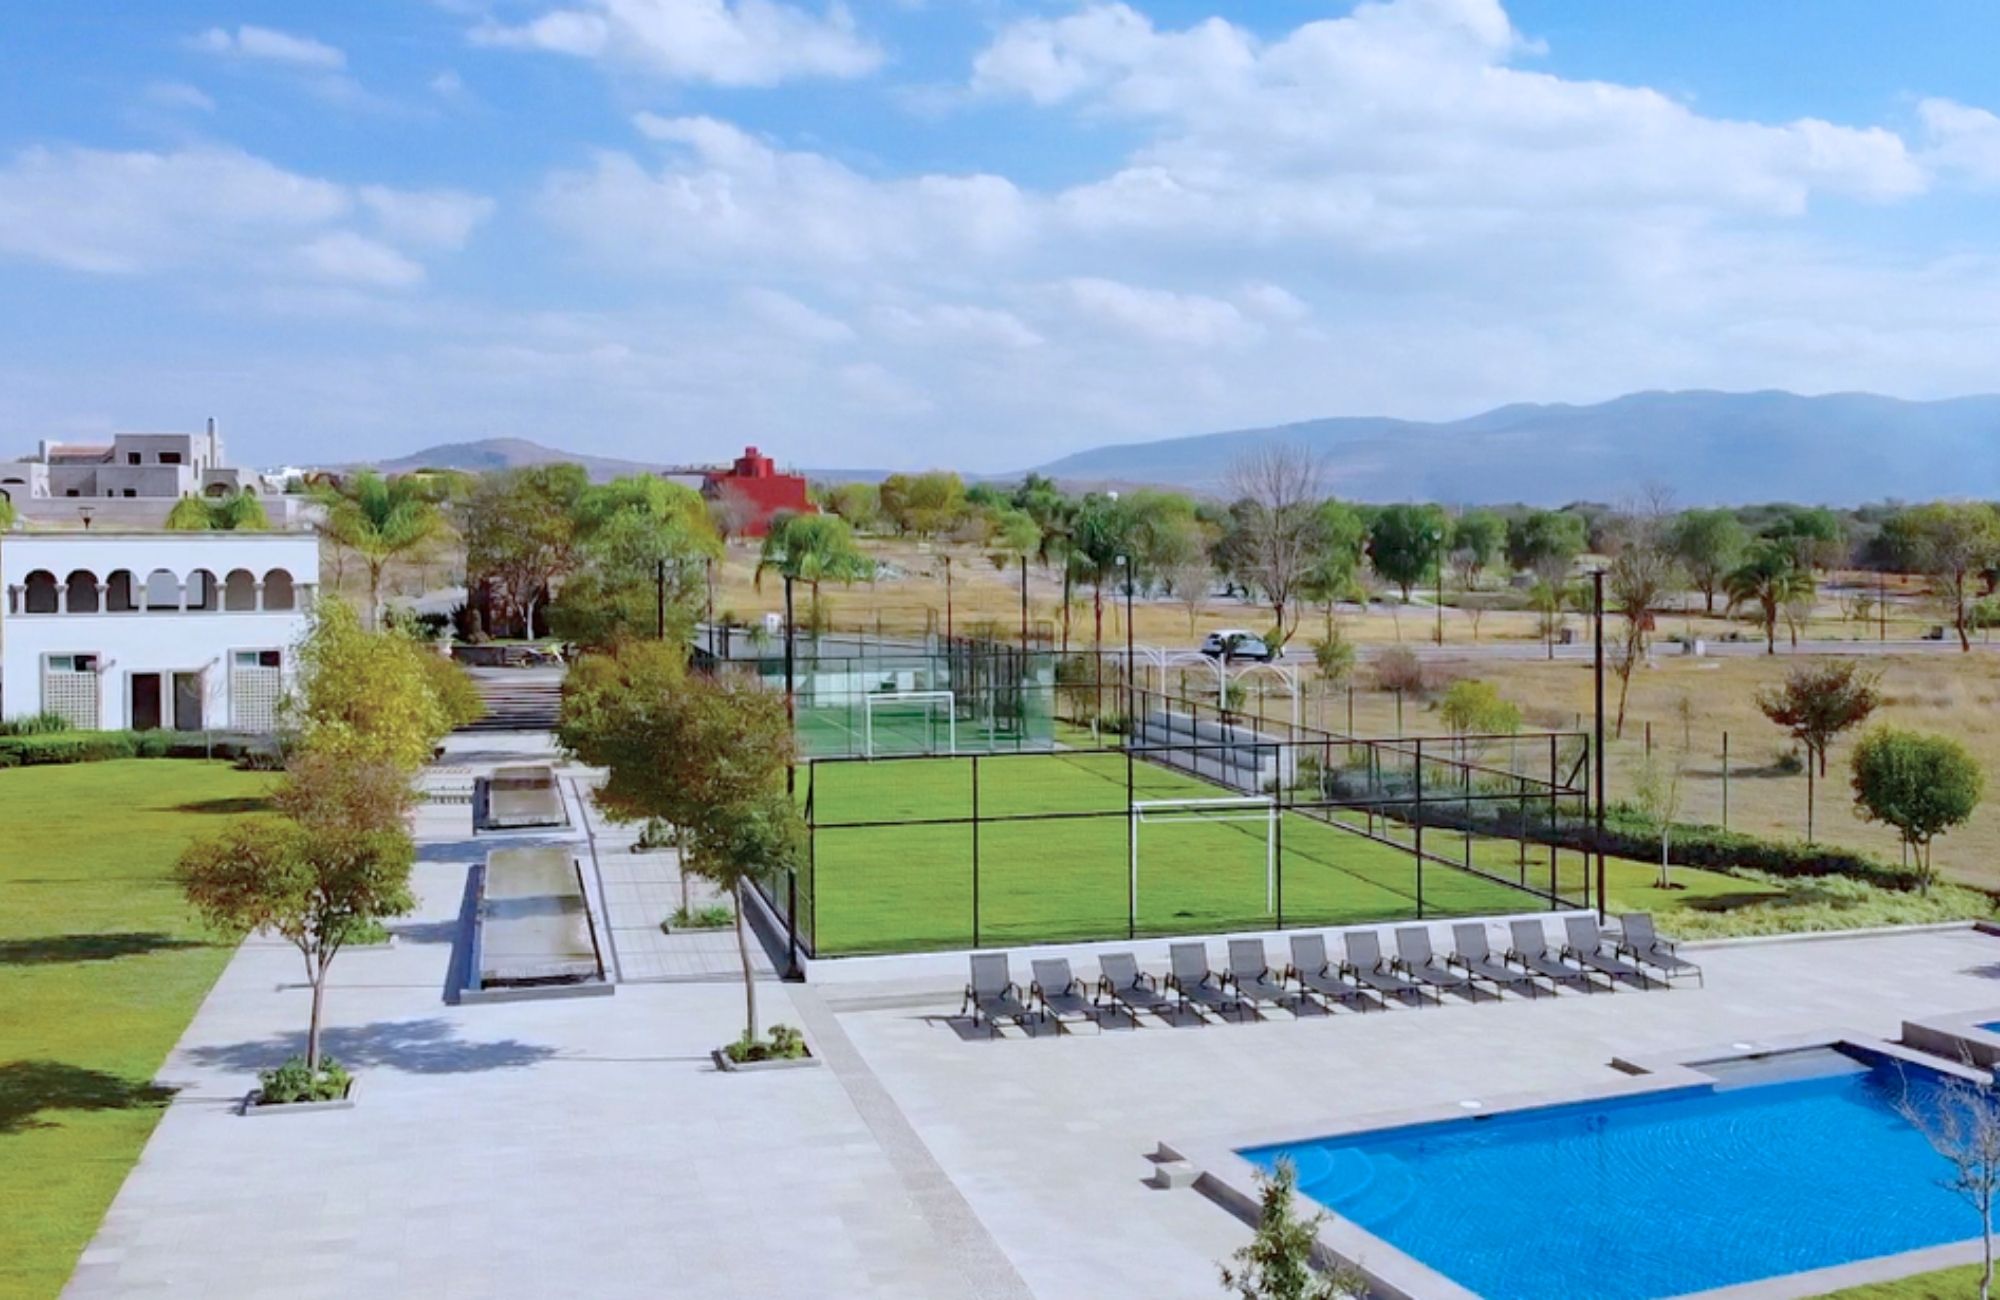 879 m2 lot in luxury community with amenities, for sale San Miguel de Allende.